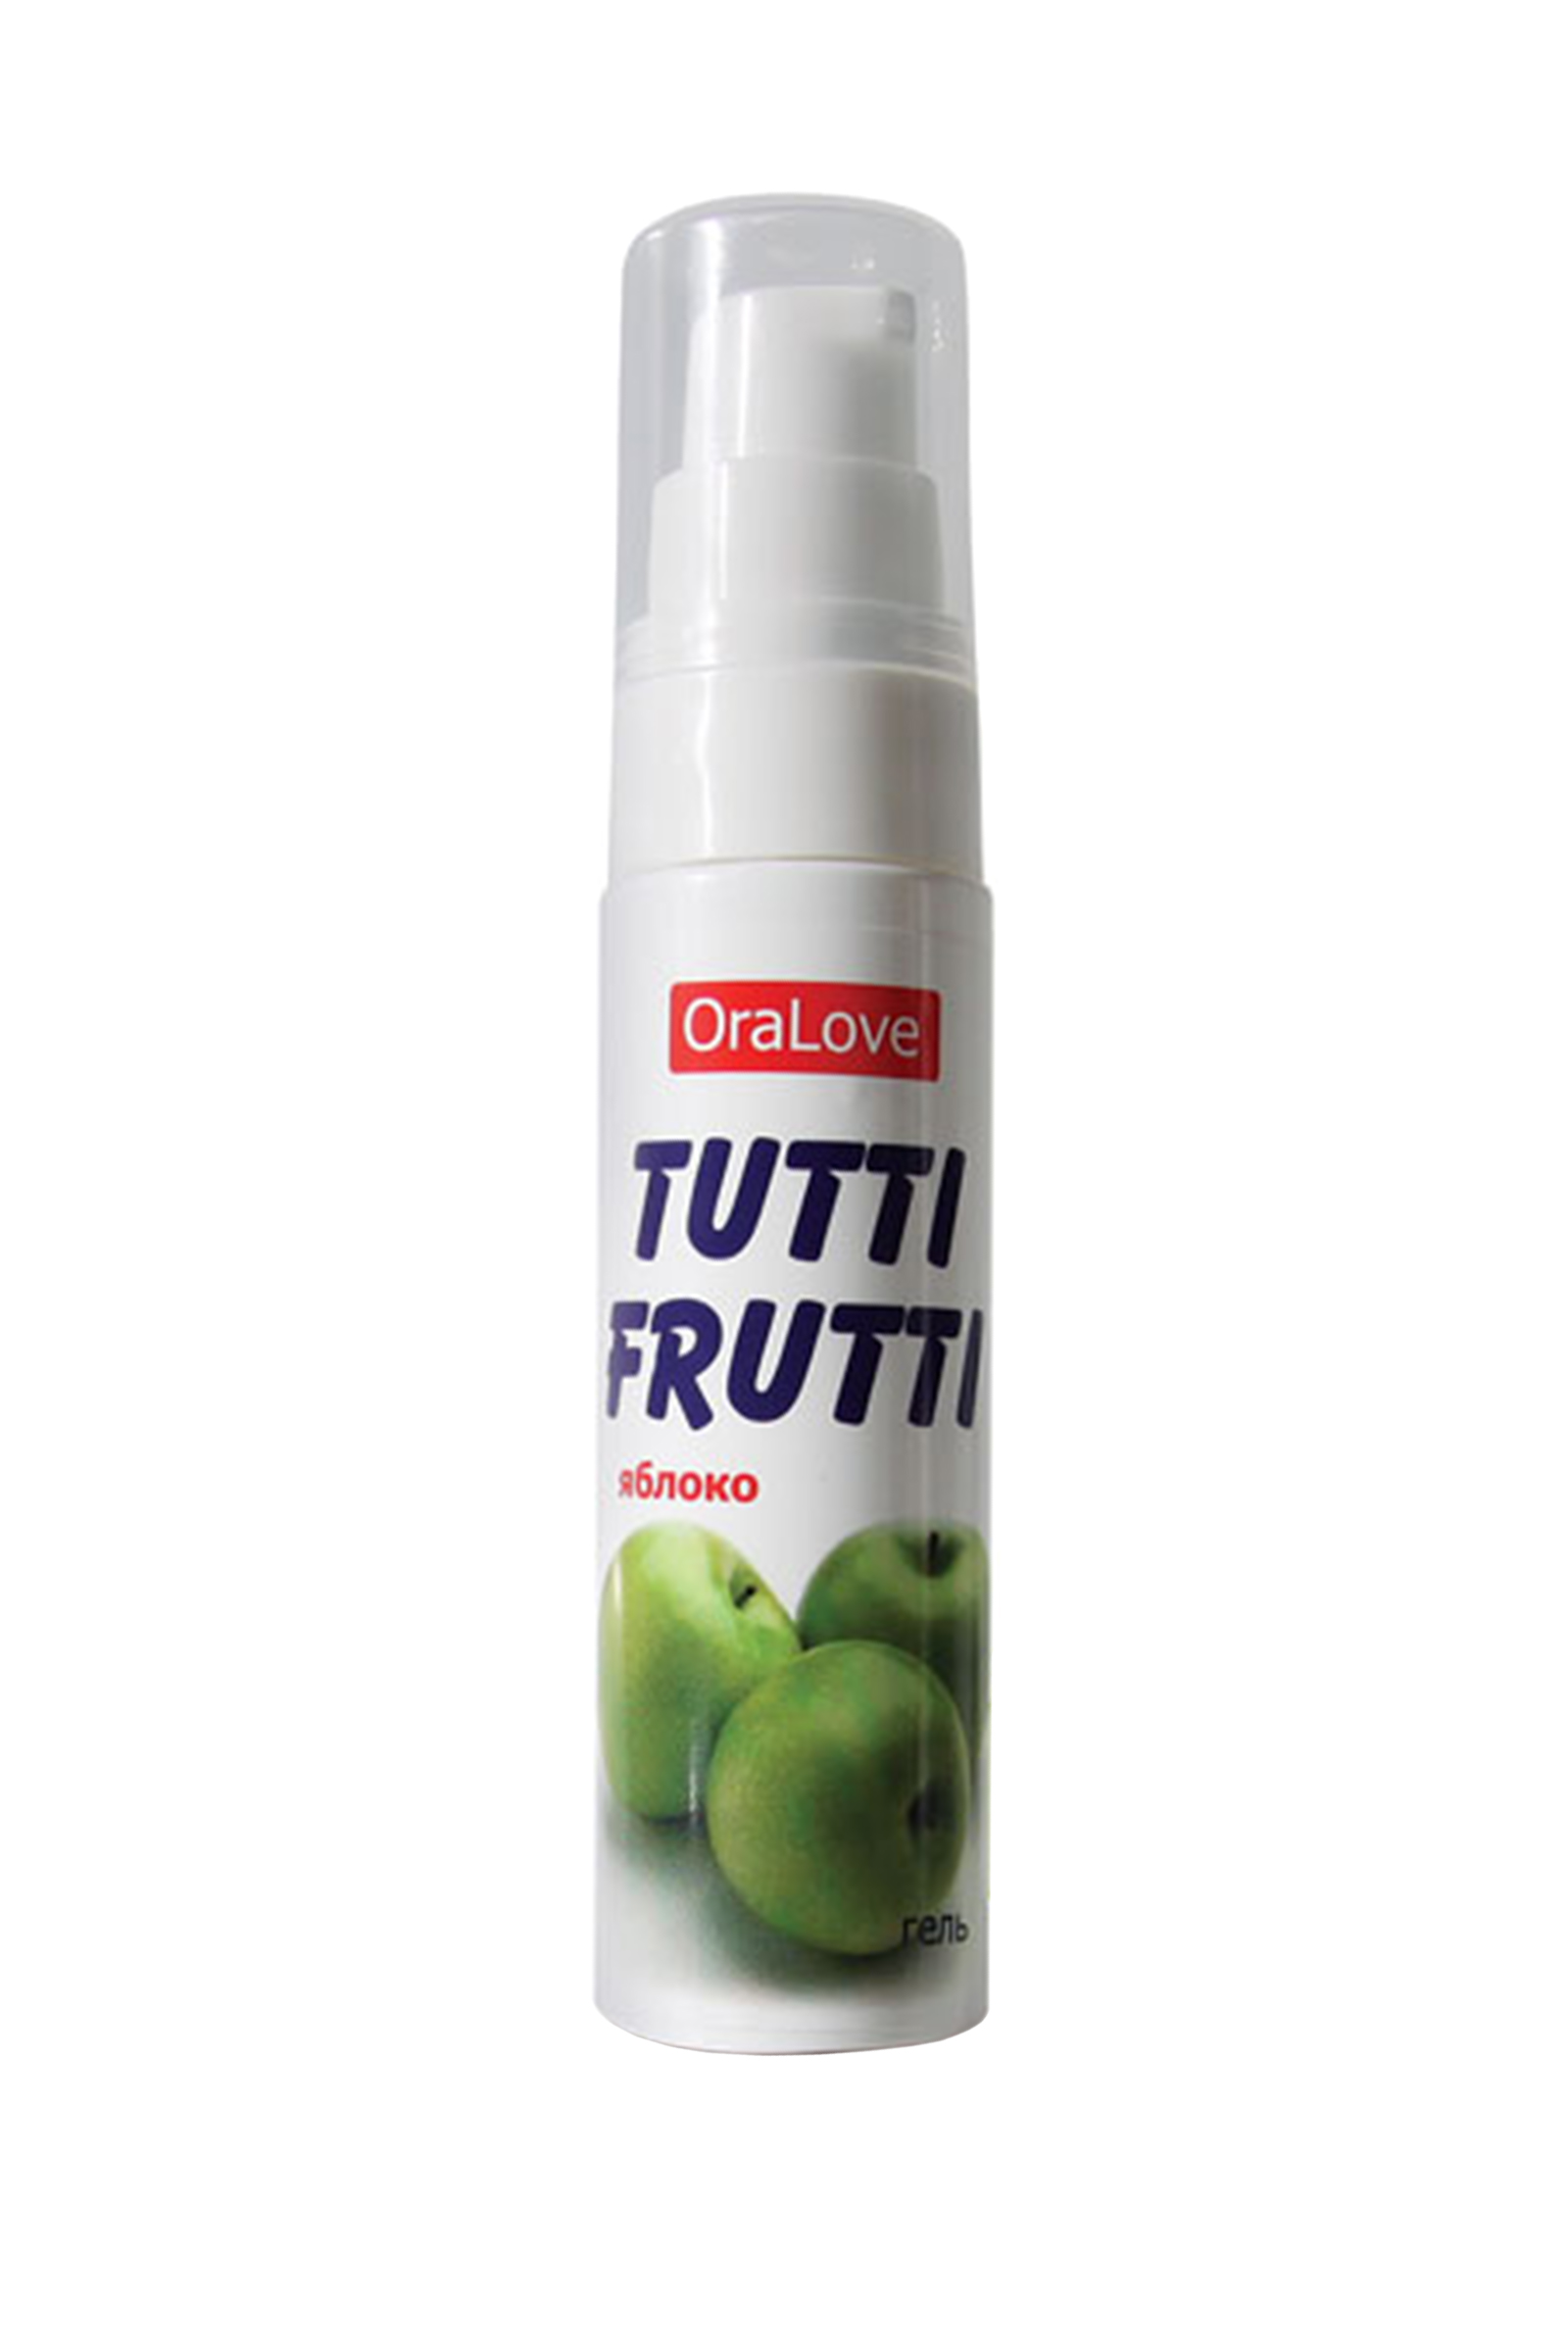 Съедобная гель-смазка TUTTI-FRUTTI для орального секса со вкусом яблока 30г. Фото N2